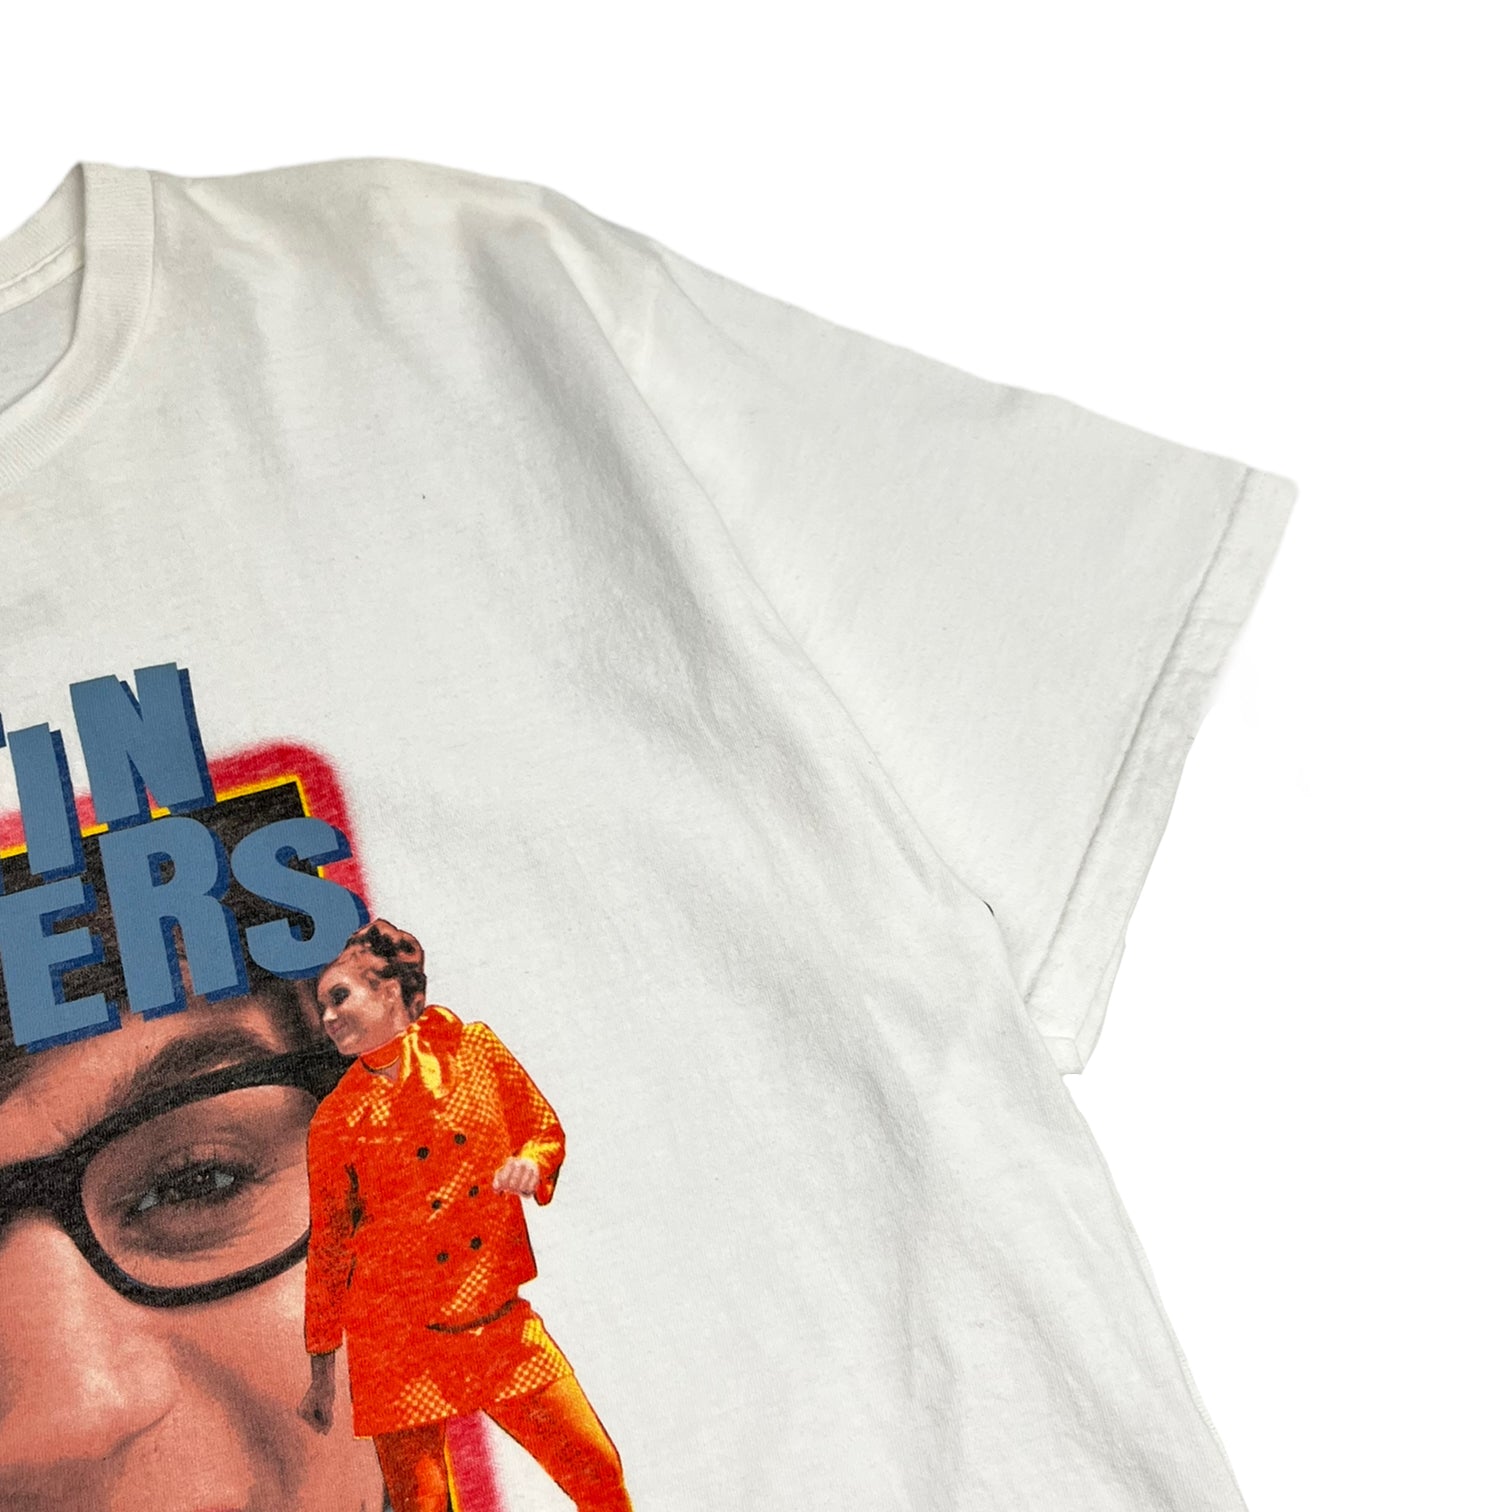 1997 Austin Powers Man Of Mystery Face T-Shirt